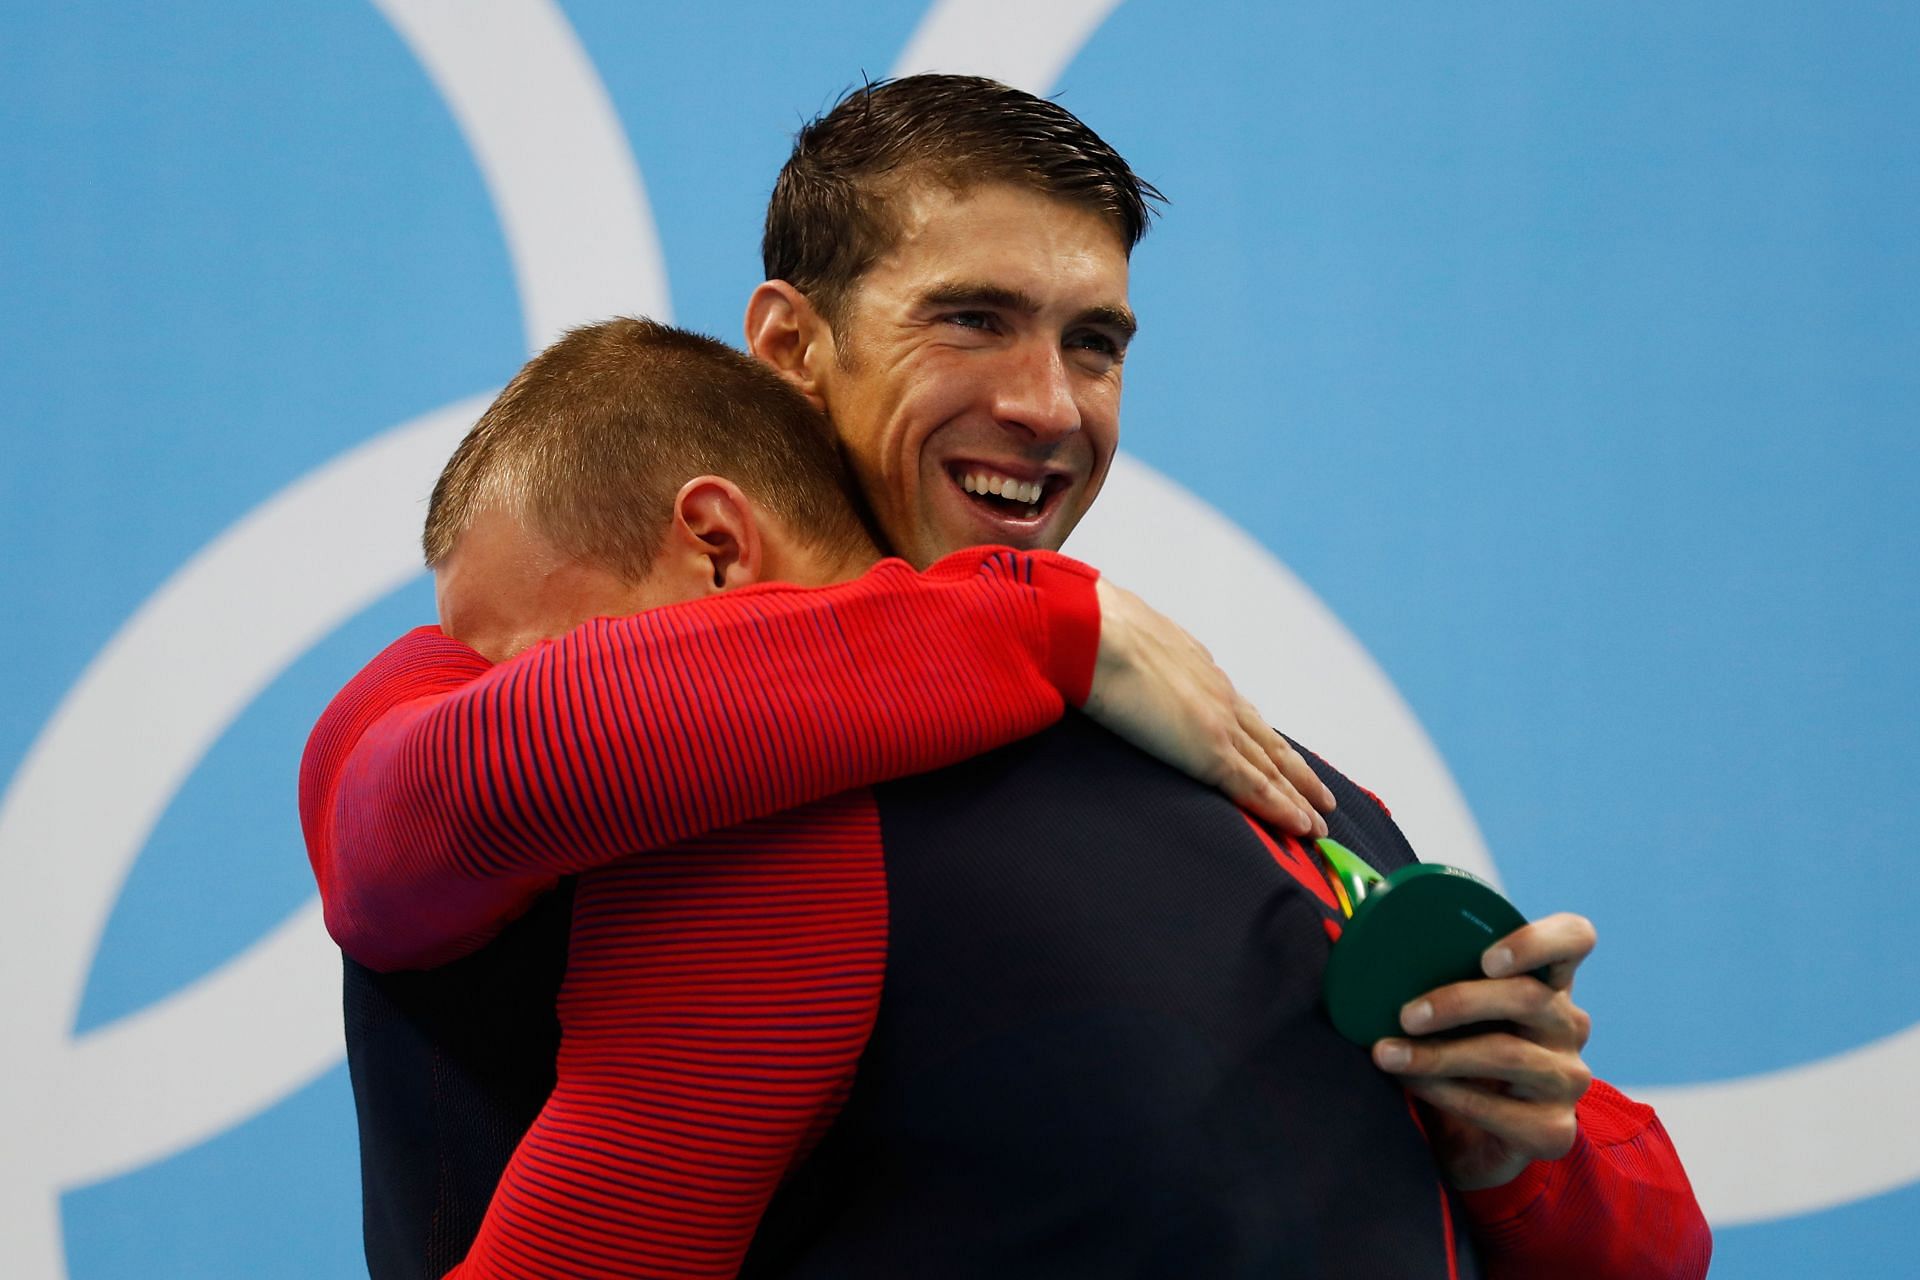 Michael Phelps and Caeleb Dressel (Image: Getty)